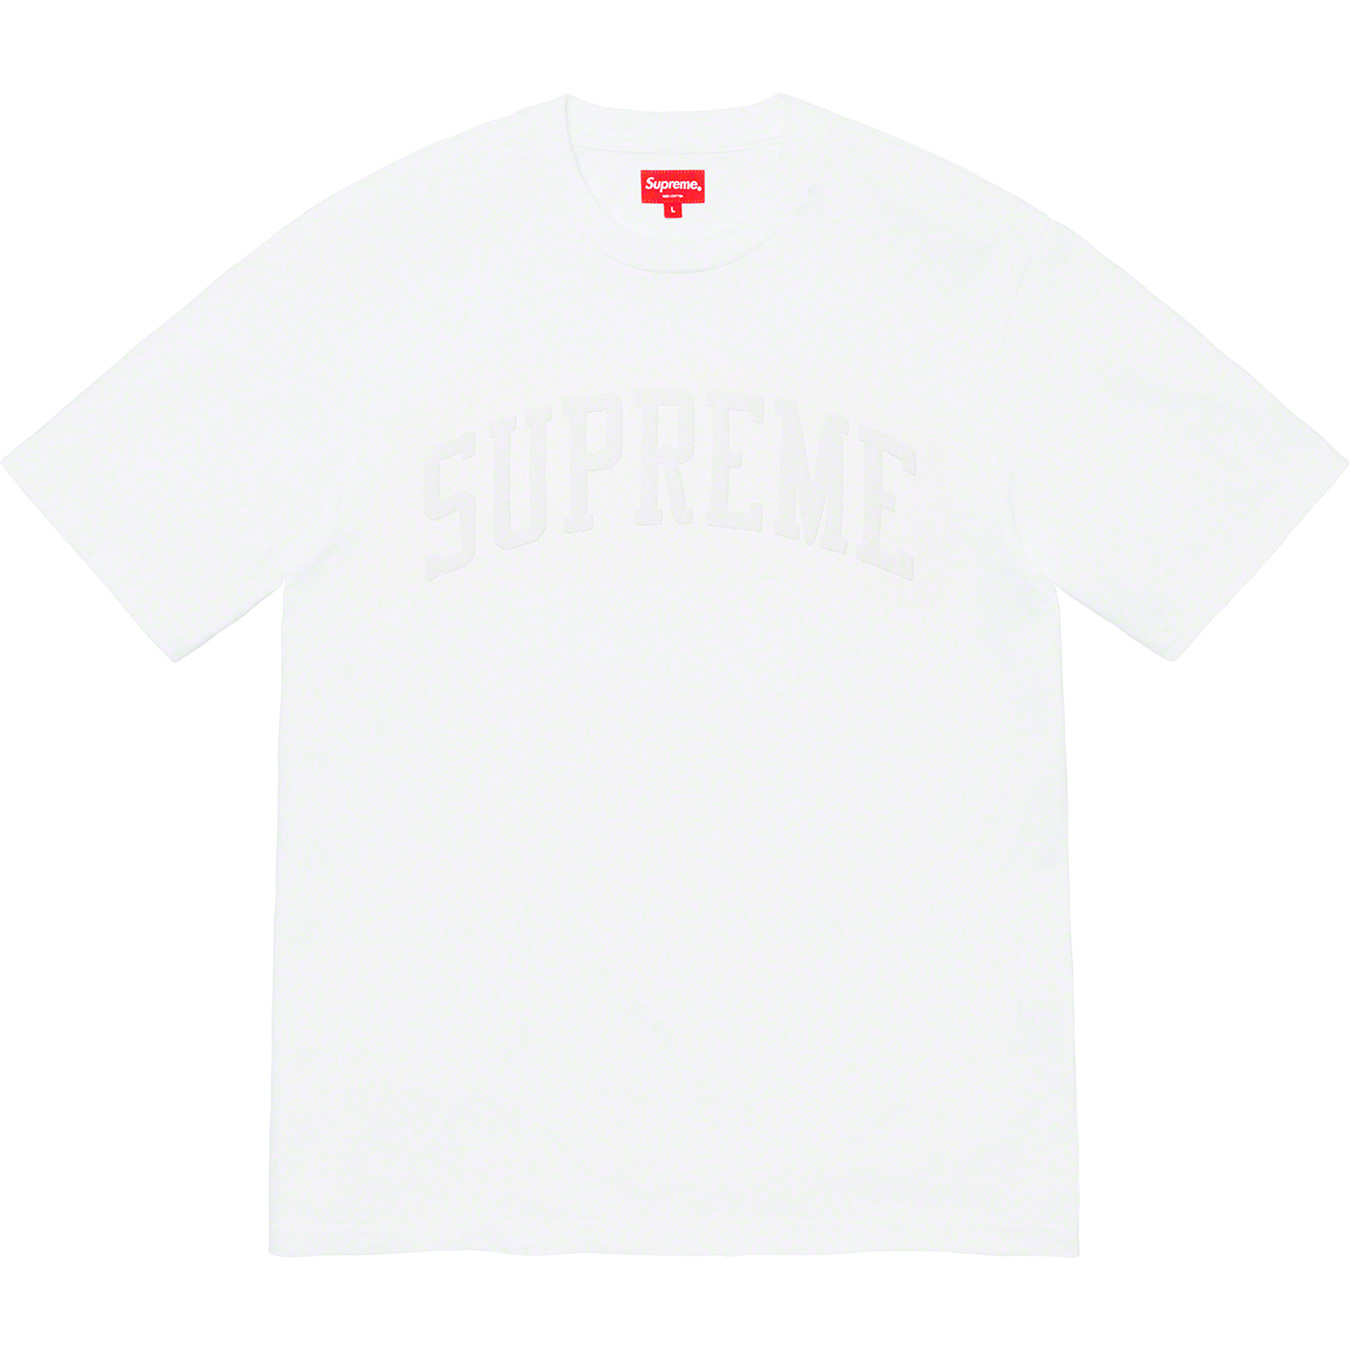 Supreme Red Cotton Arc Logo Print Crew Neck T Shirt L